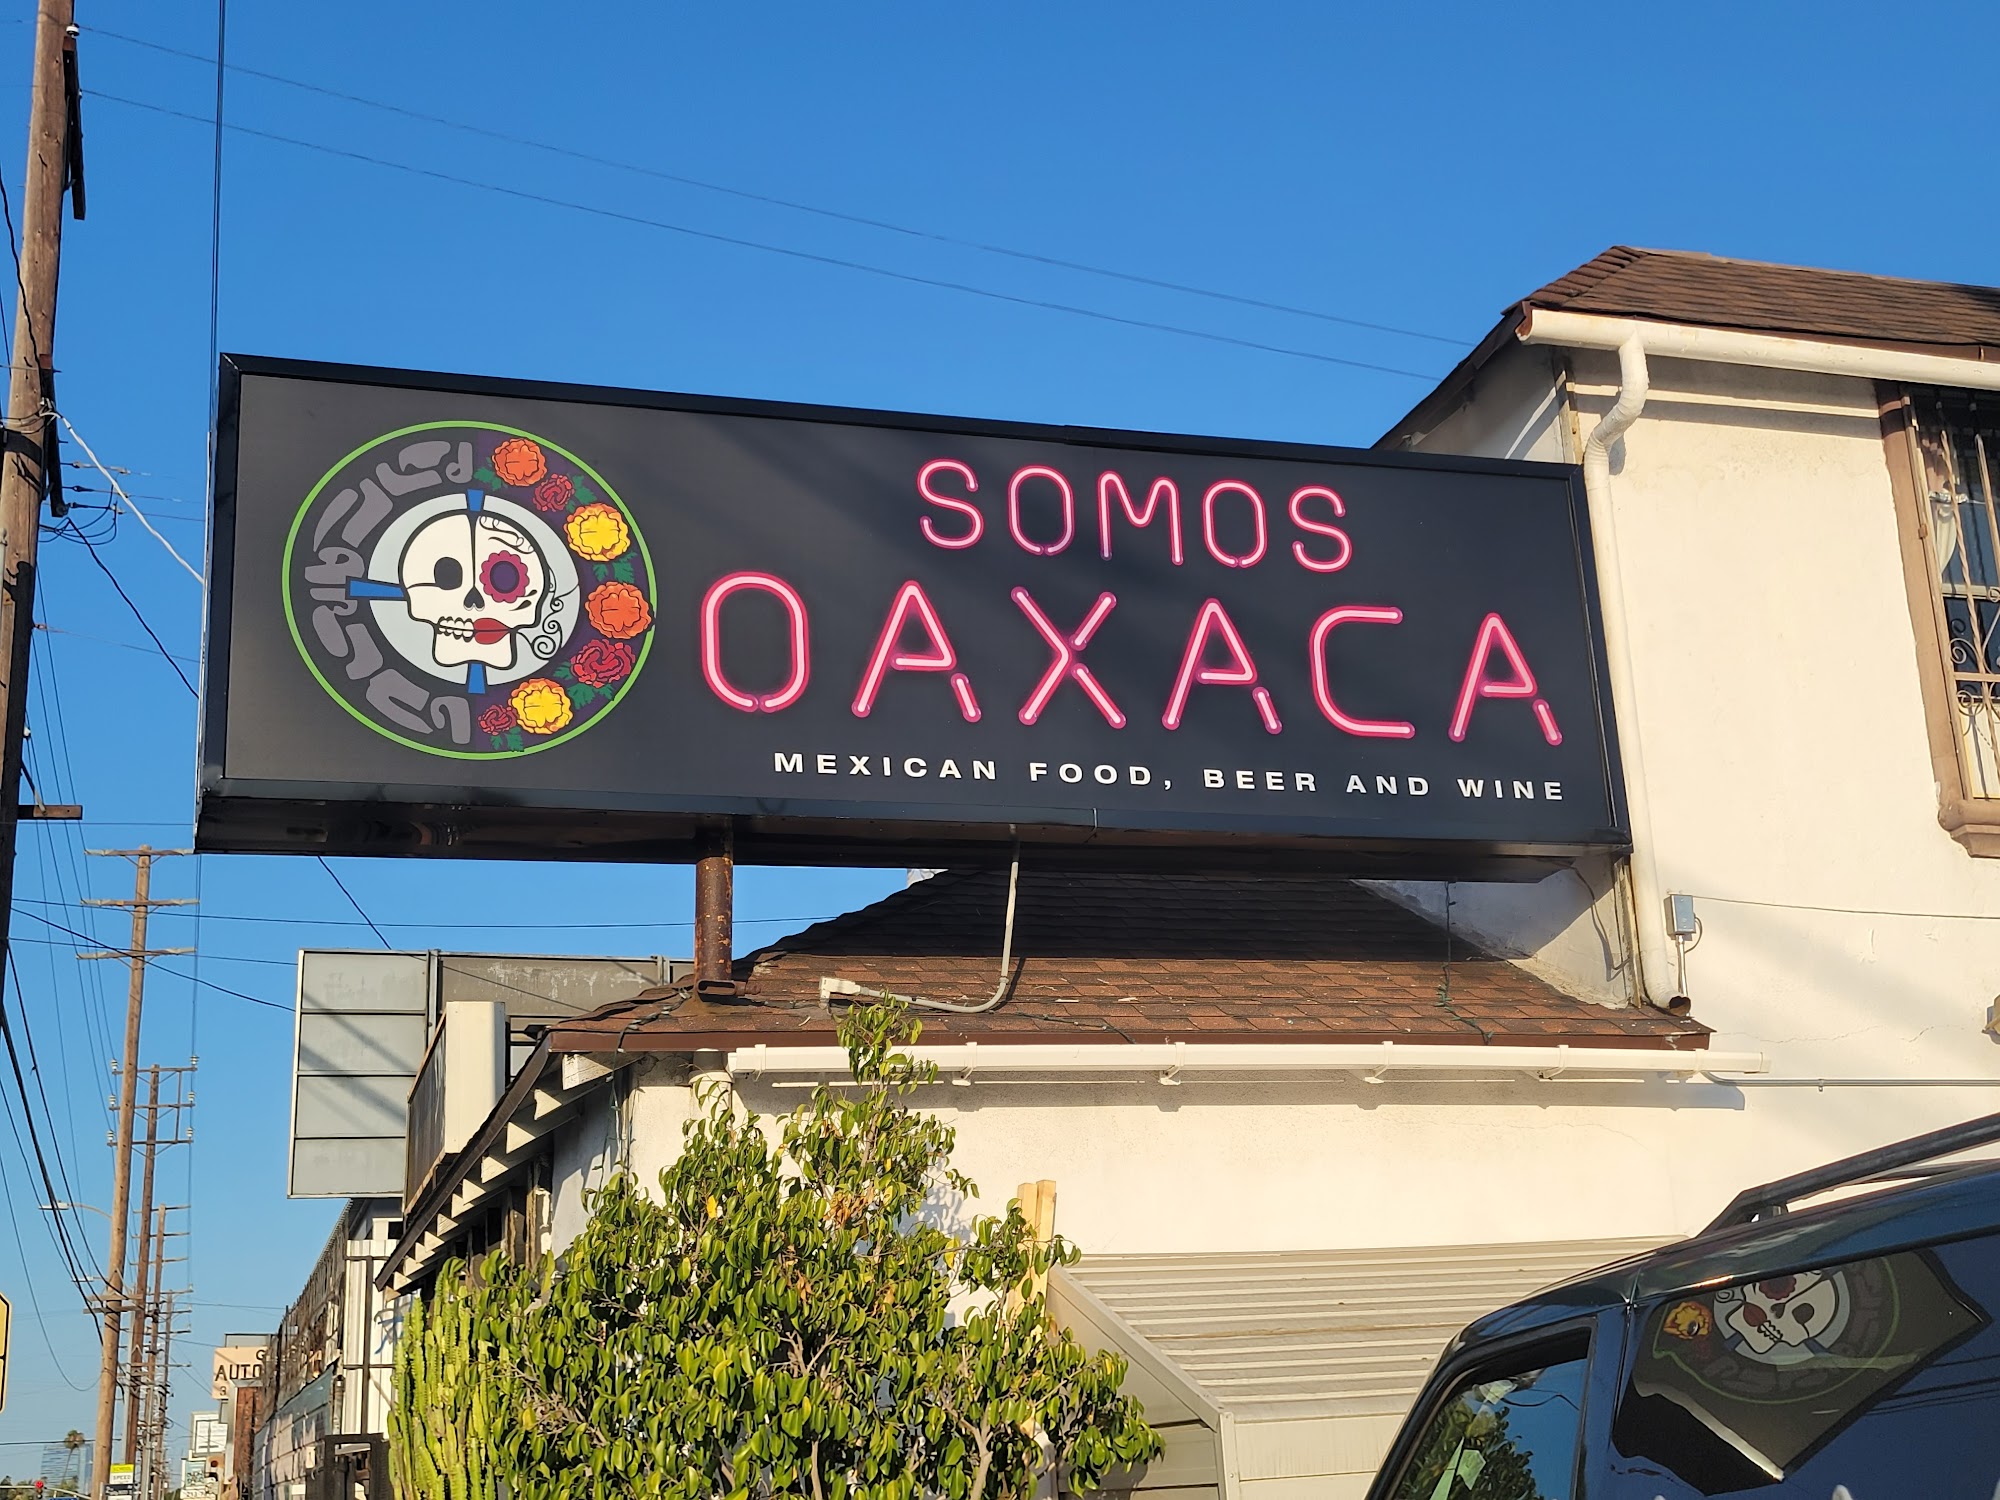 Somos Oaxaca